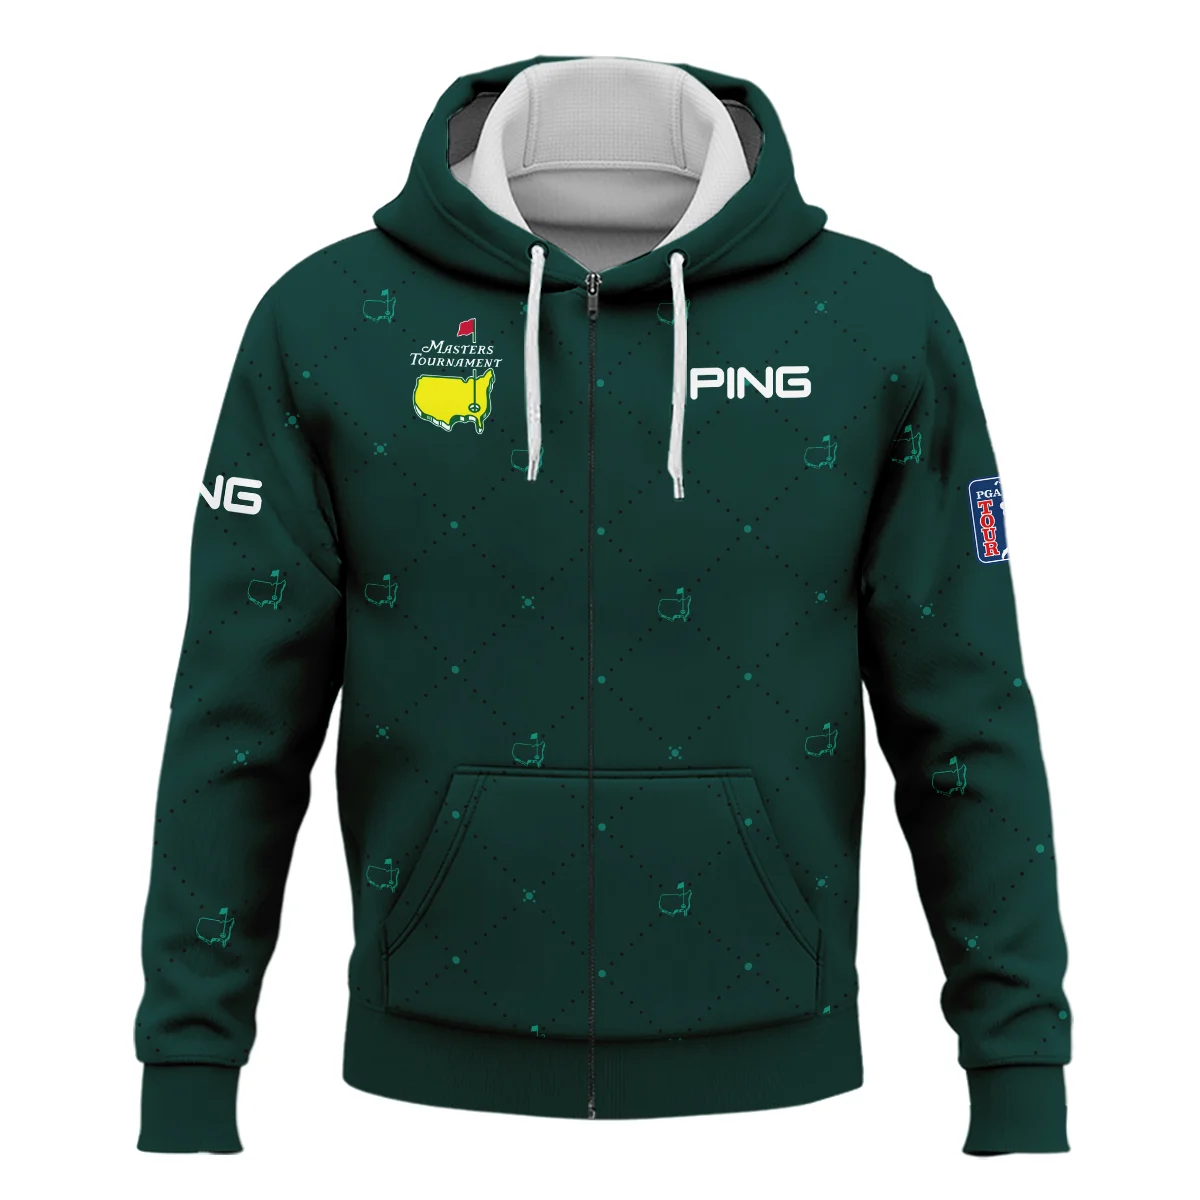 Dark Green Pattern In Retro Style With Logo Masters Tournament Ping Zipper Hoodie Shirt Style Classic Zipper Hoodie Shirt